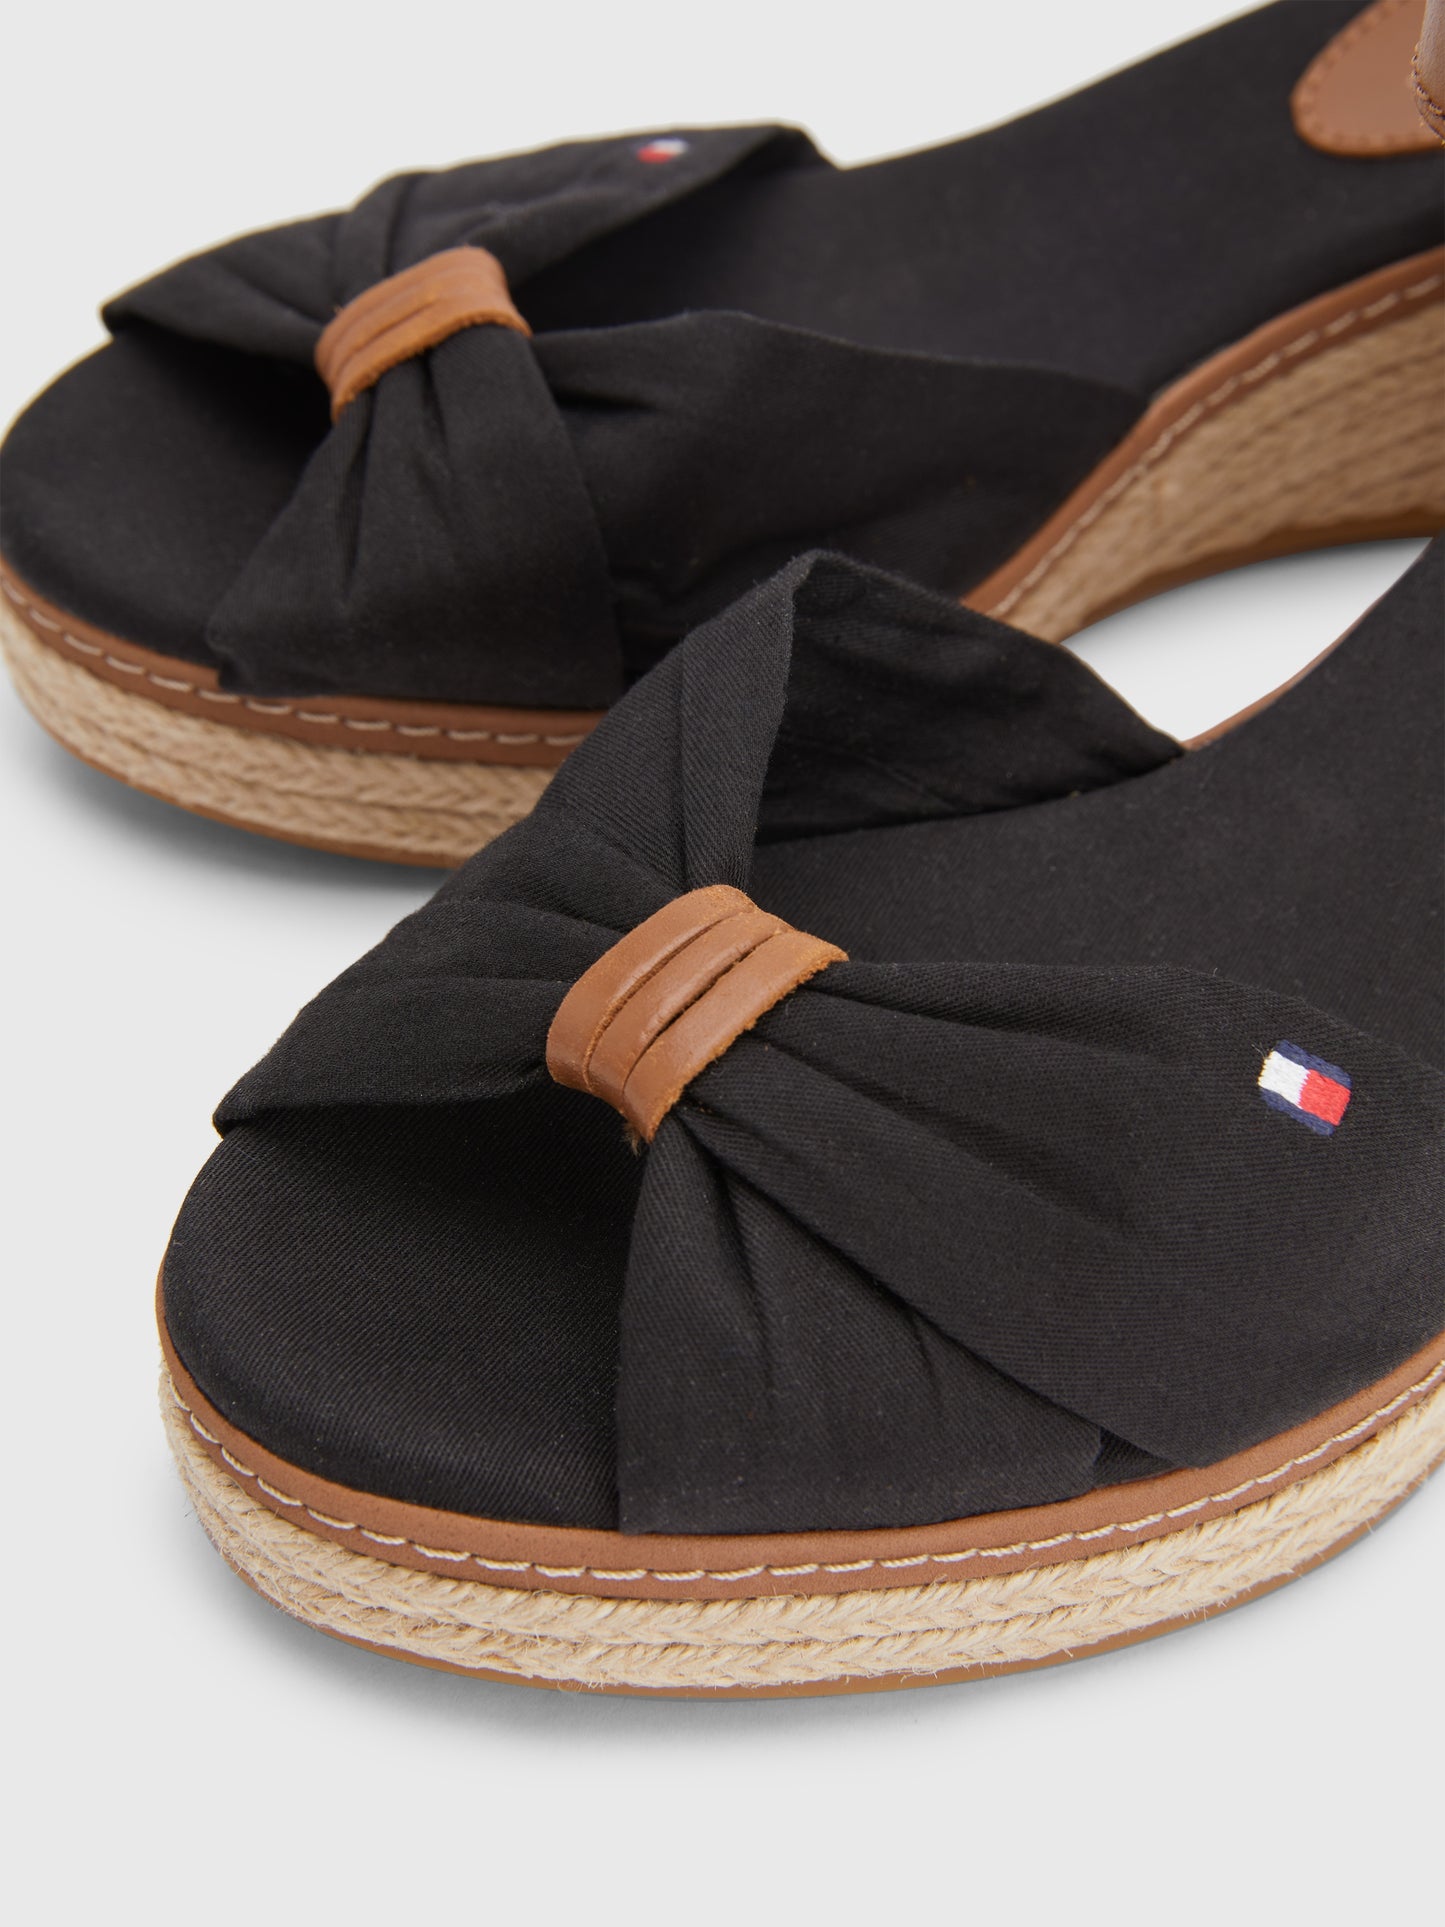 Tommy Hilfiger Iconic Wedge Espadrille Sandals - Black